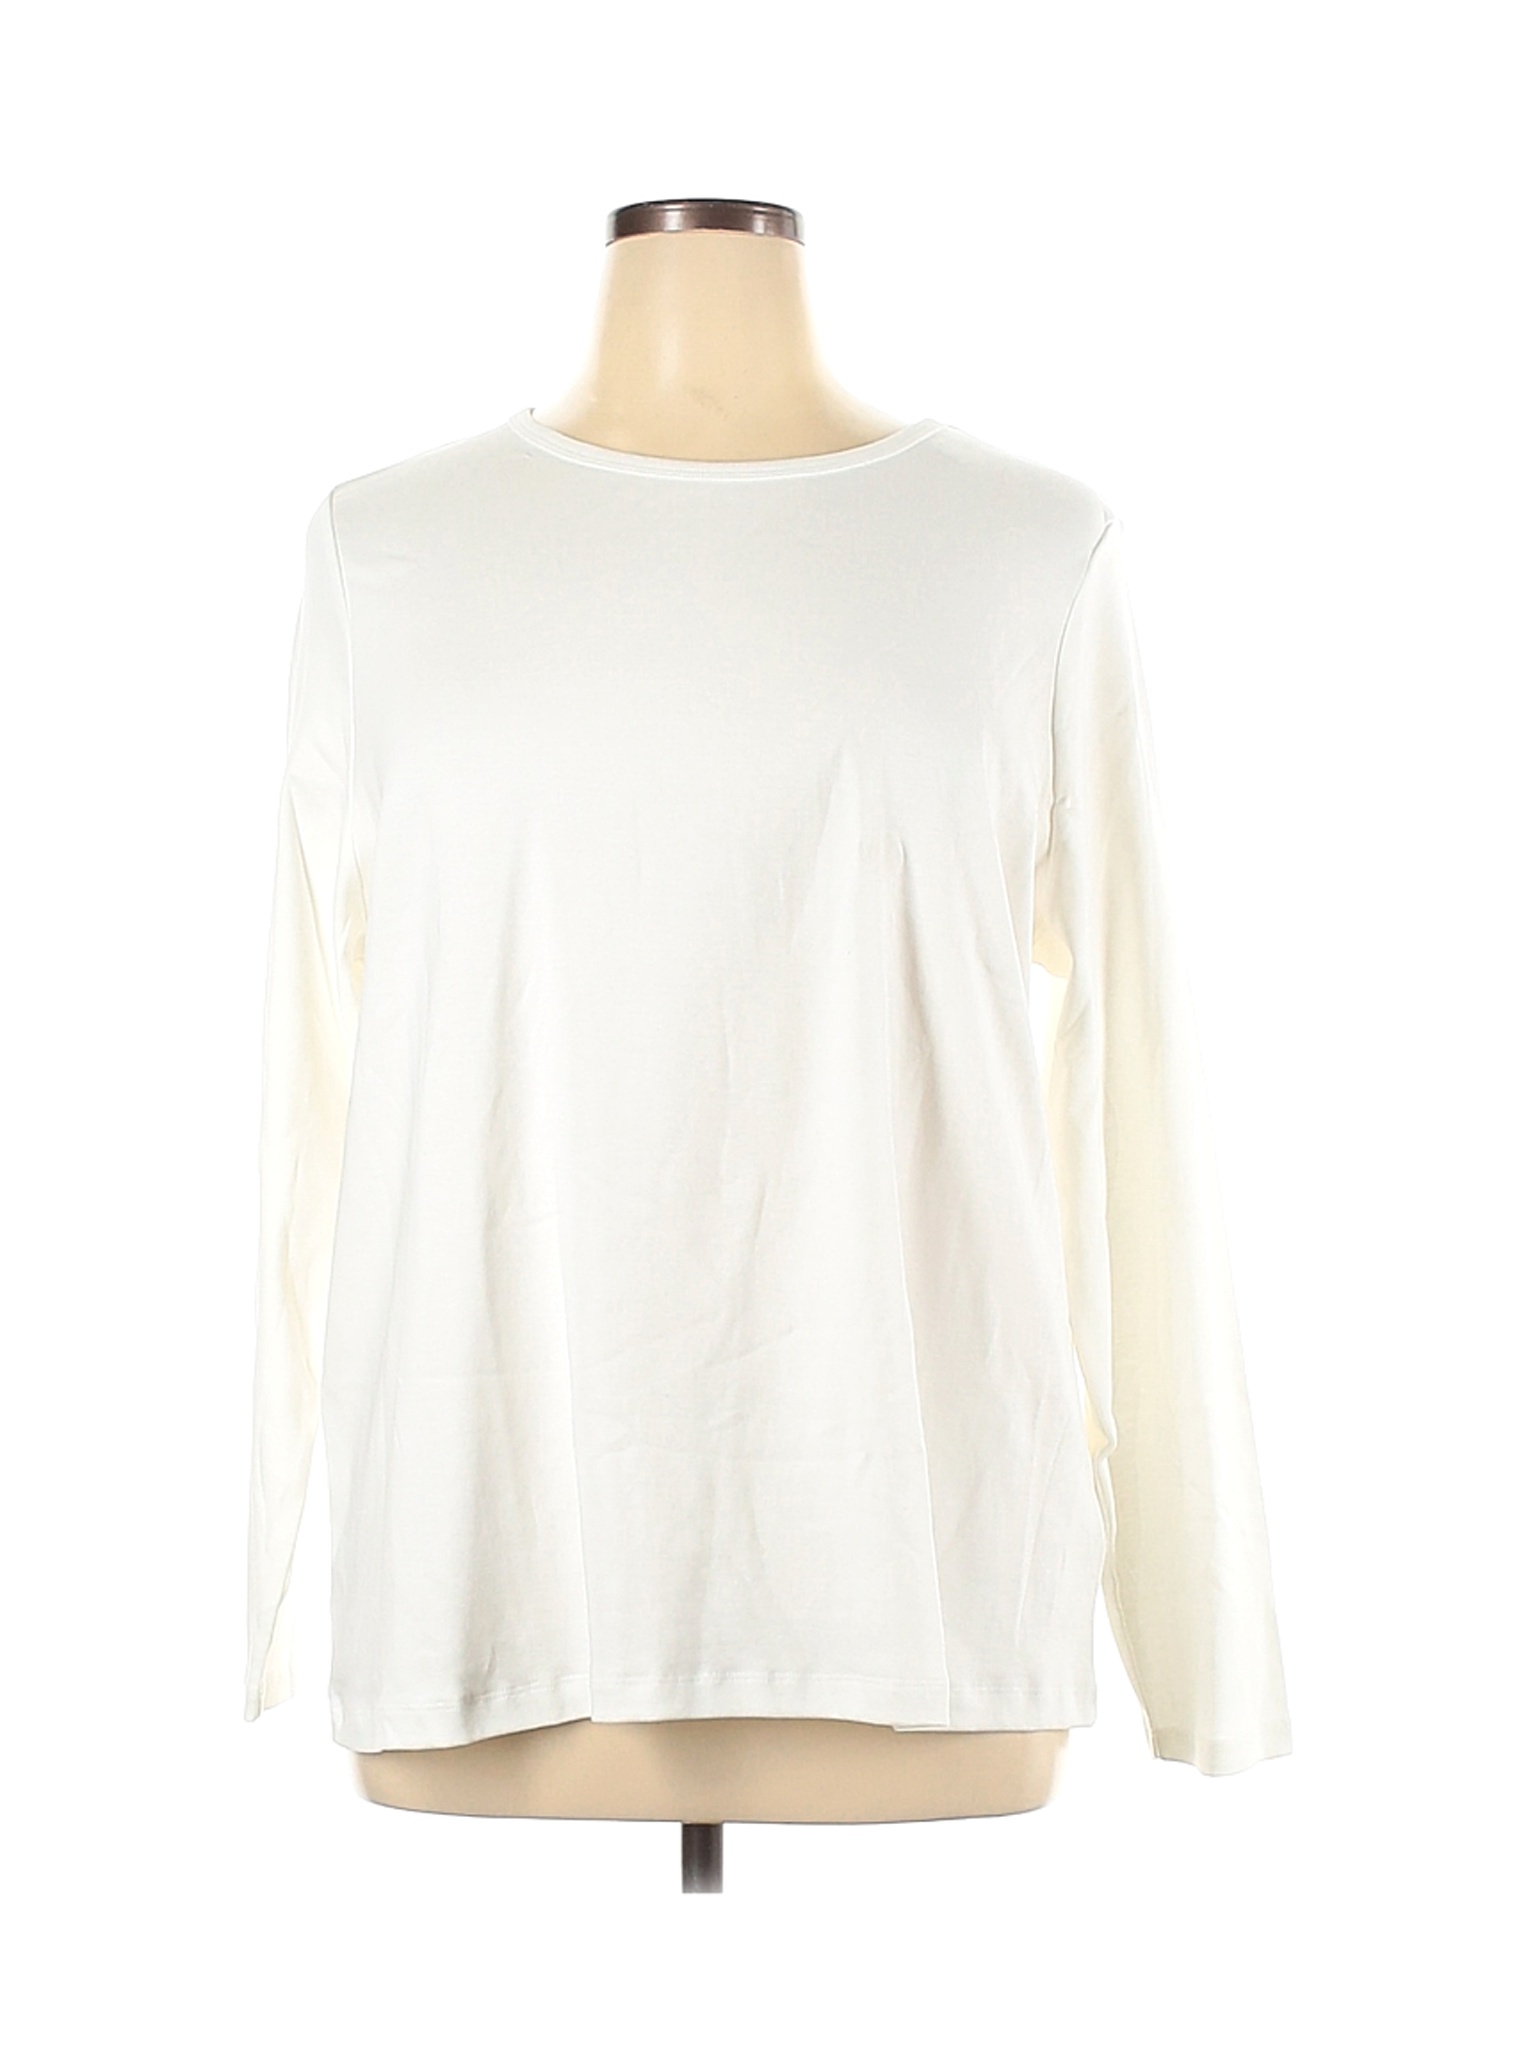 NWT Lands' End Women White Long Sleeve T-Shirt 2X Plus | eBay